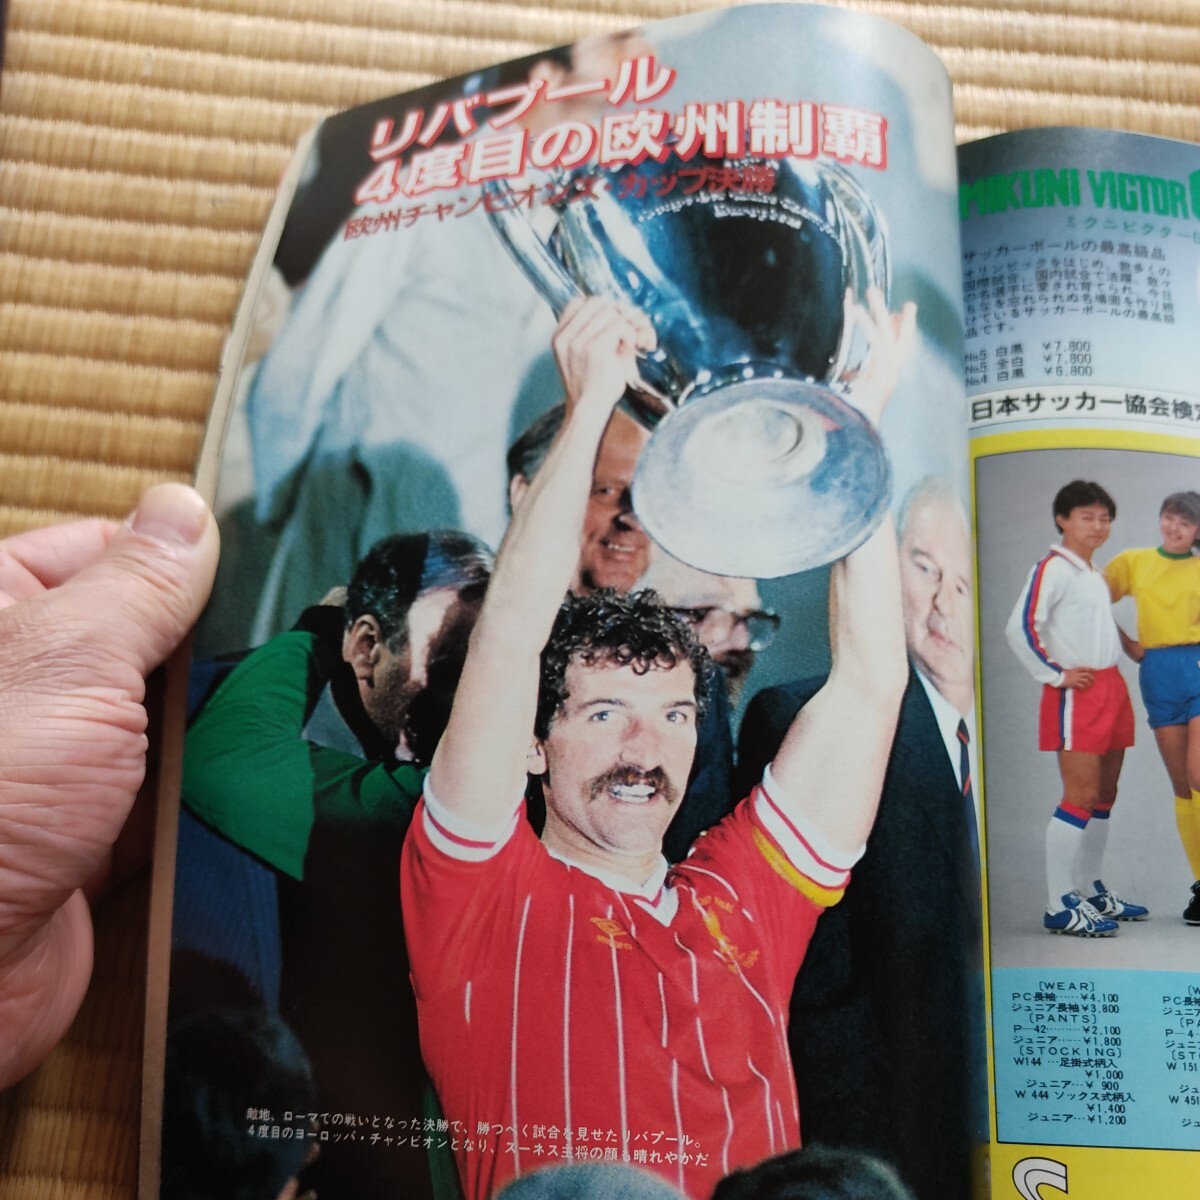  soccer magazine 8/1984 Japan cup Japan representative inside temple tail cape liba pool 